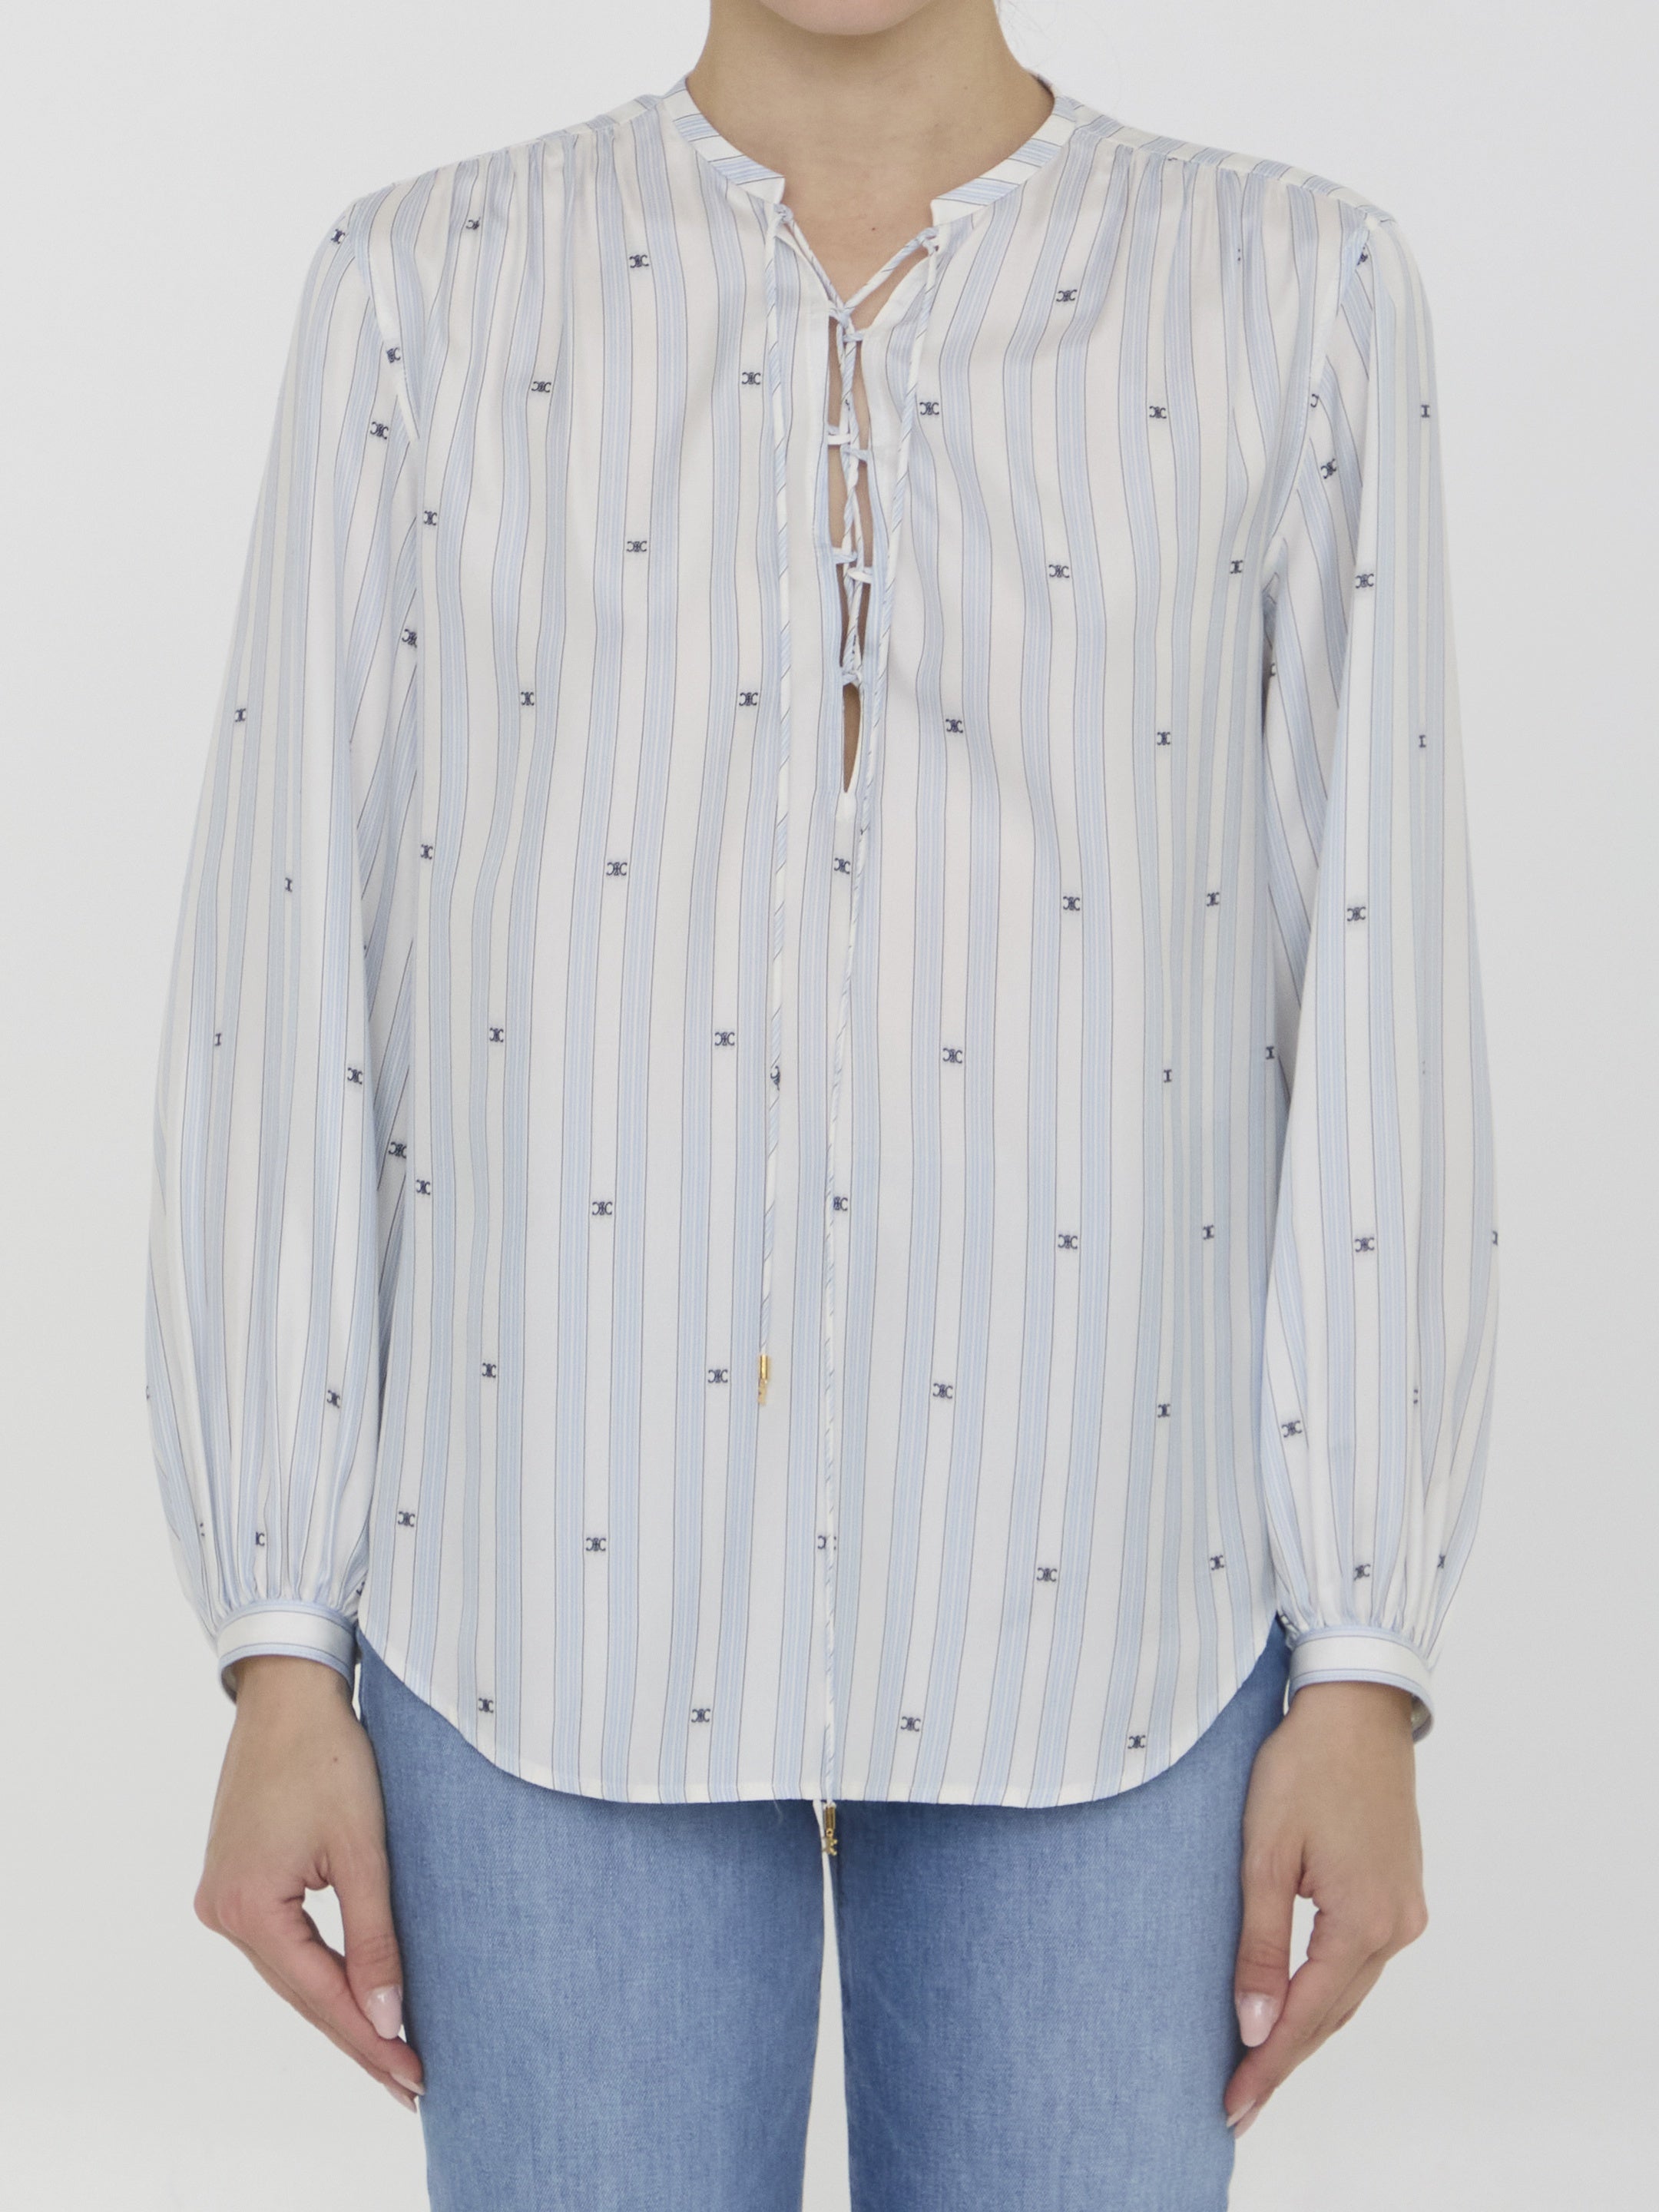 CELINE-OUTLET-SALE-Romy-blouse-Blusen-34-WHITE-ARCHIVE-COLLECTION.jpg